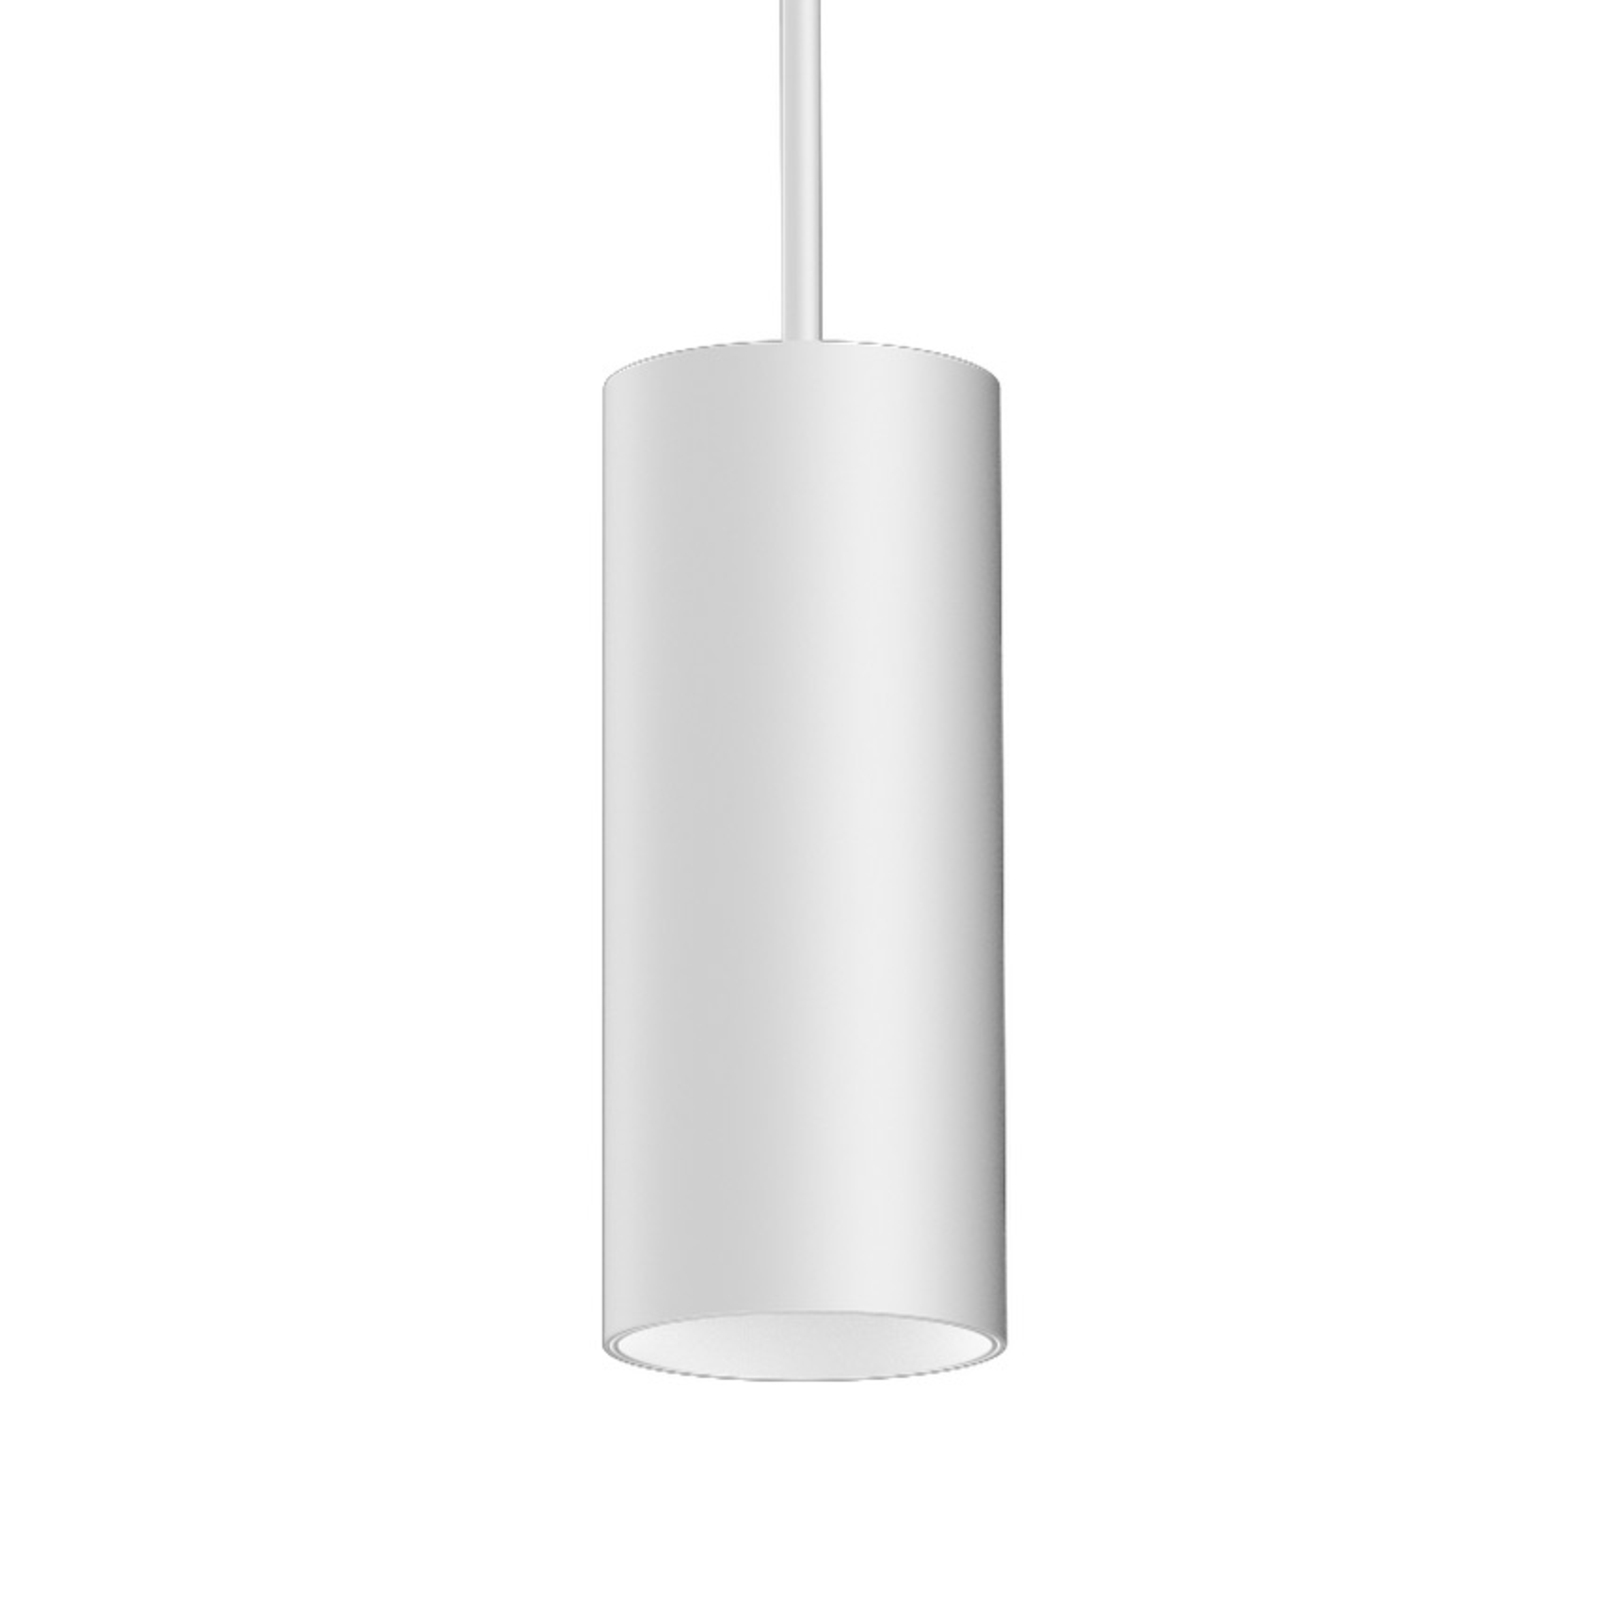 XAL Ary LED viseča svetilka DALI bela 940 44°